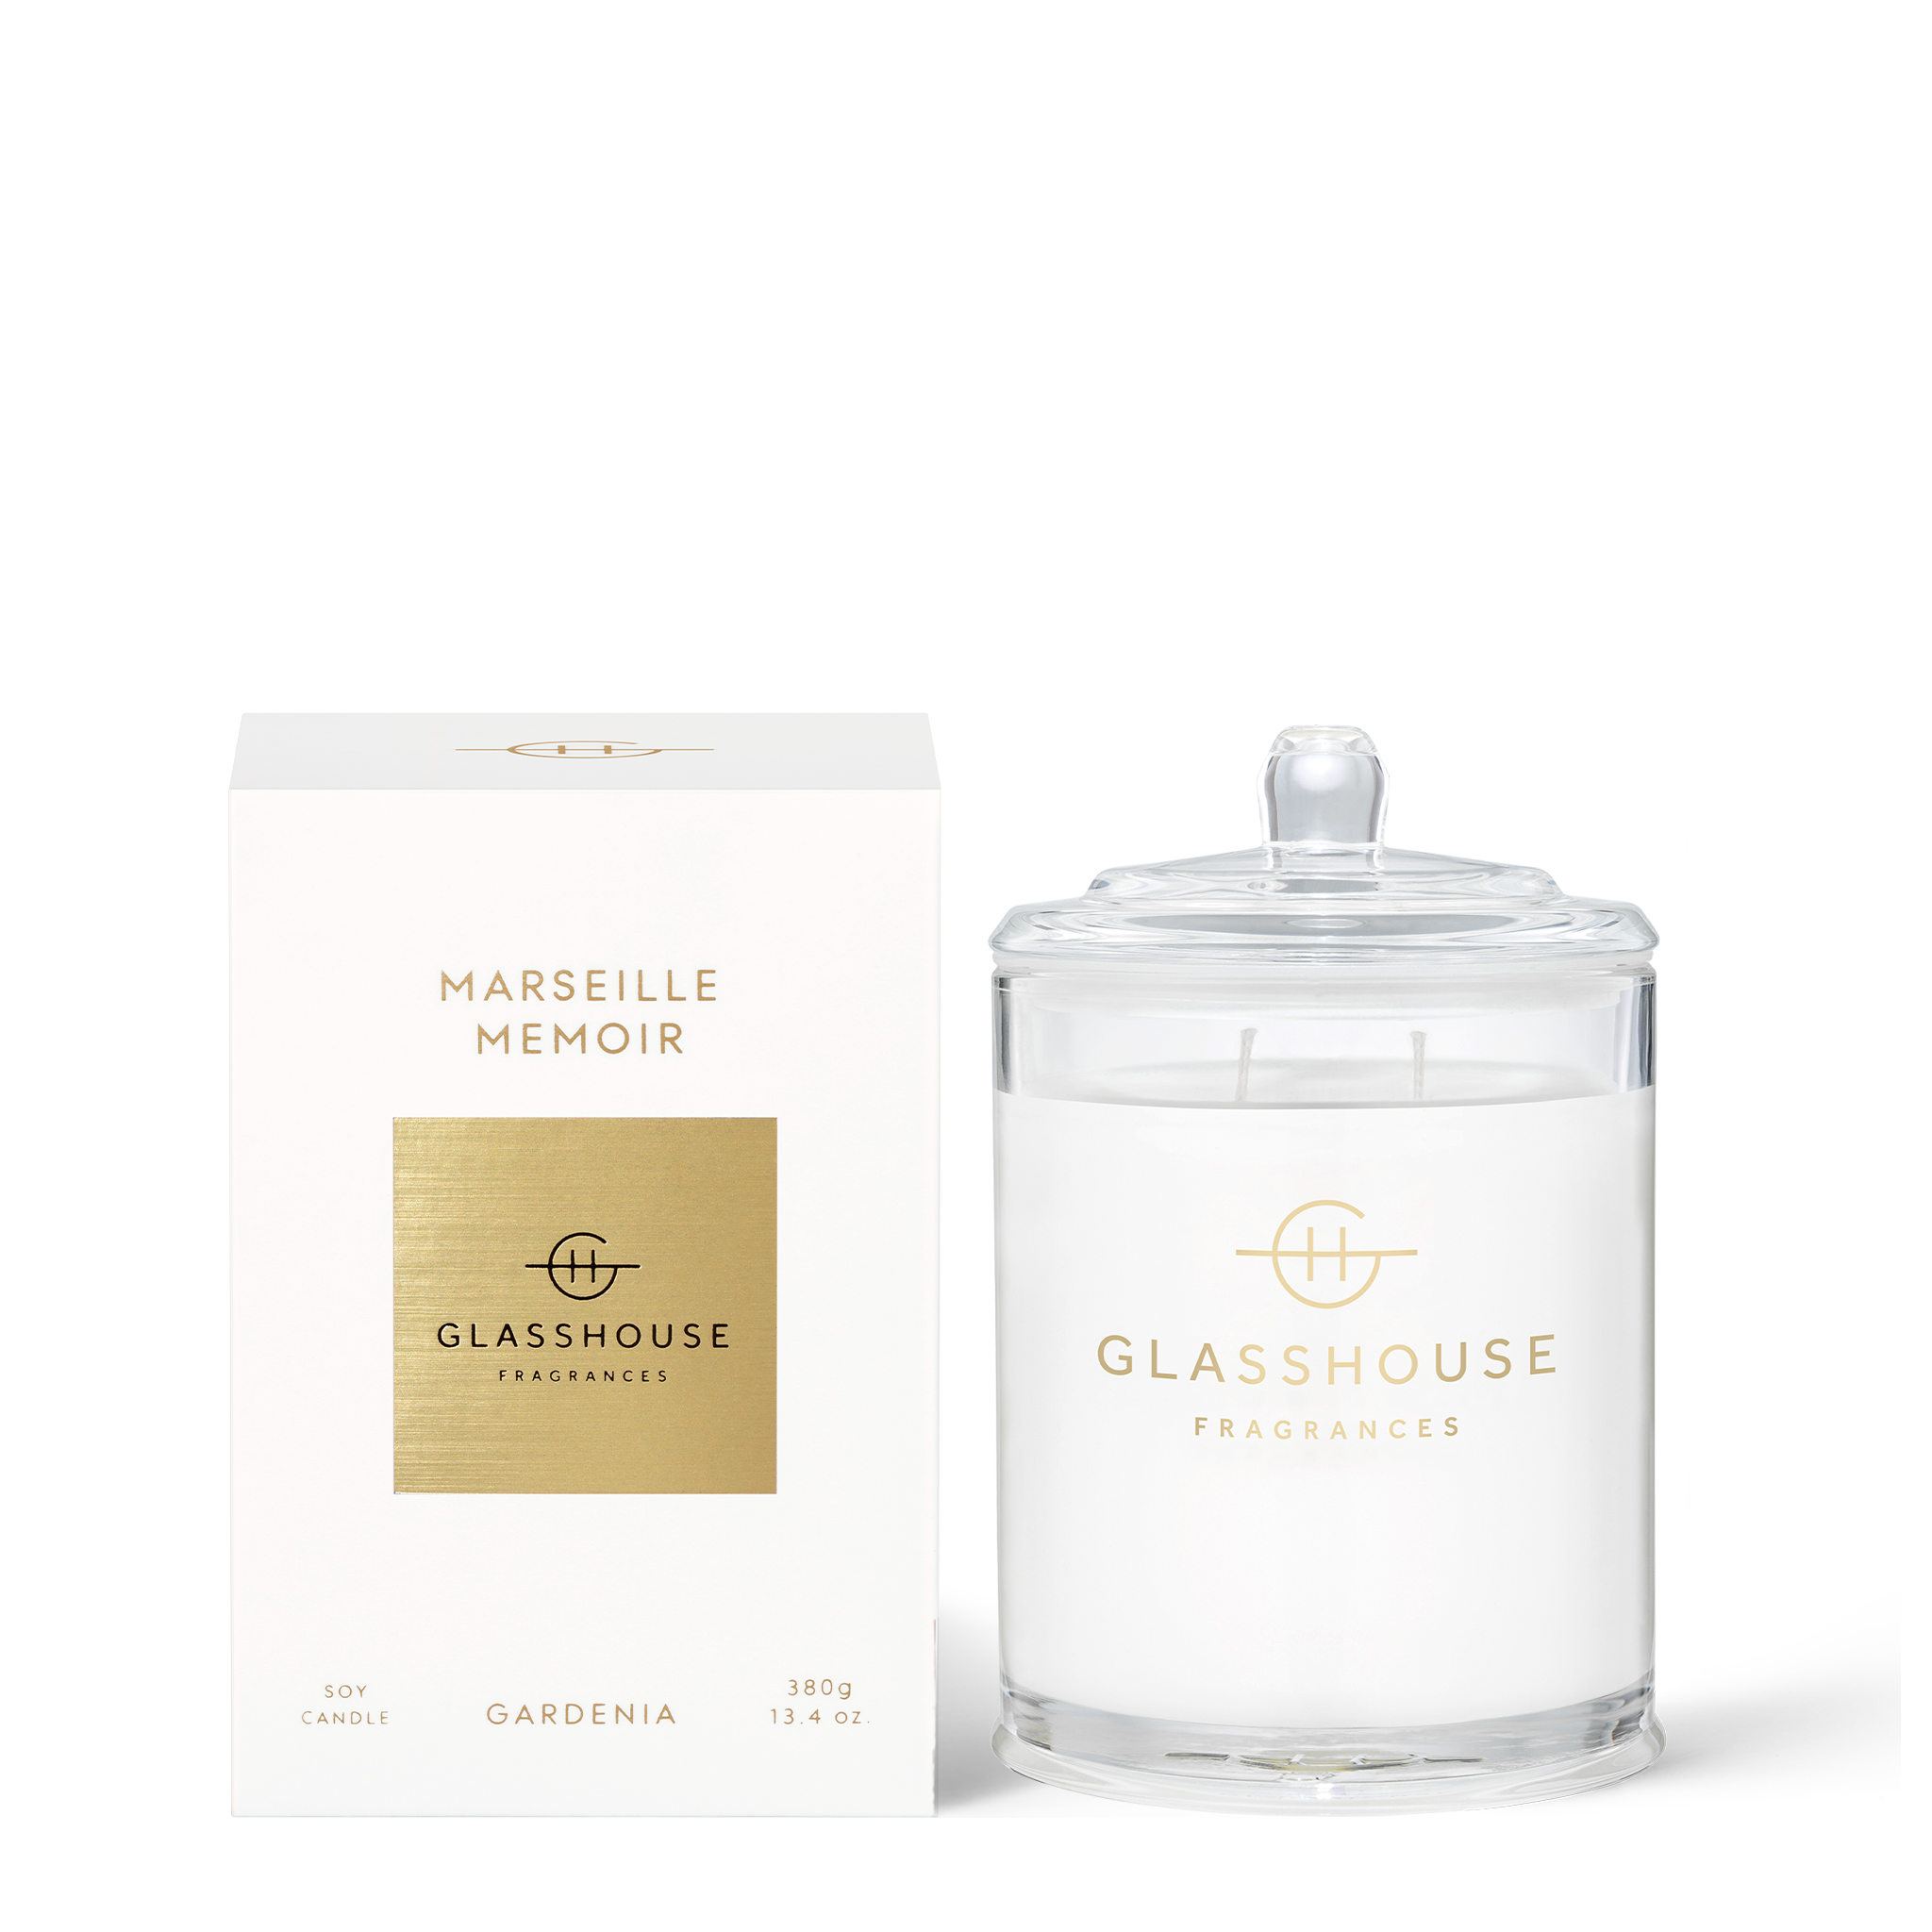 Glasshouse Fragrances 380g Soy Candle - MARSEILLE MEMOIR - Gardenia